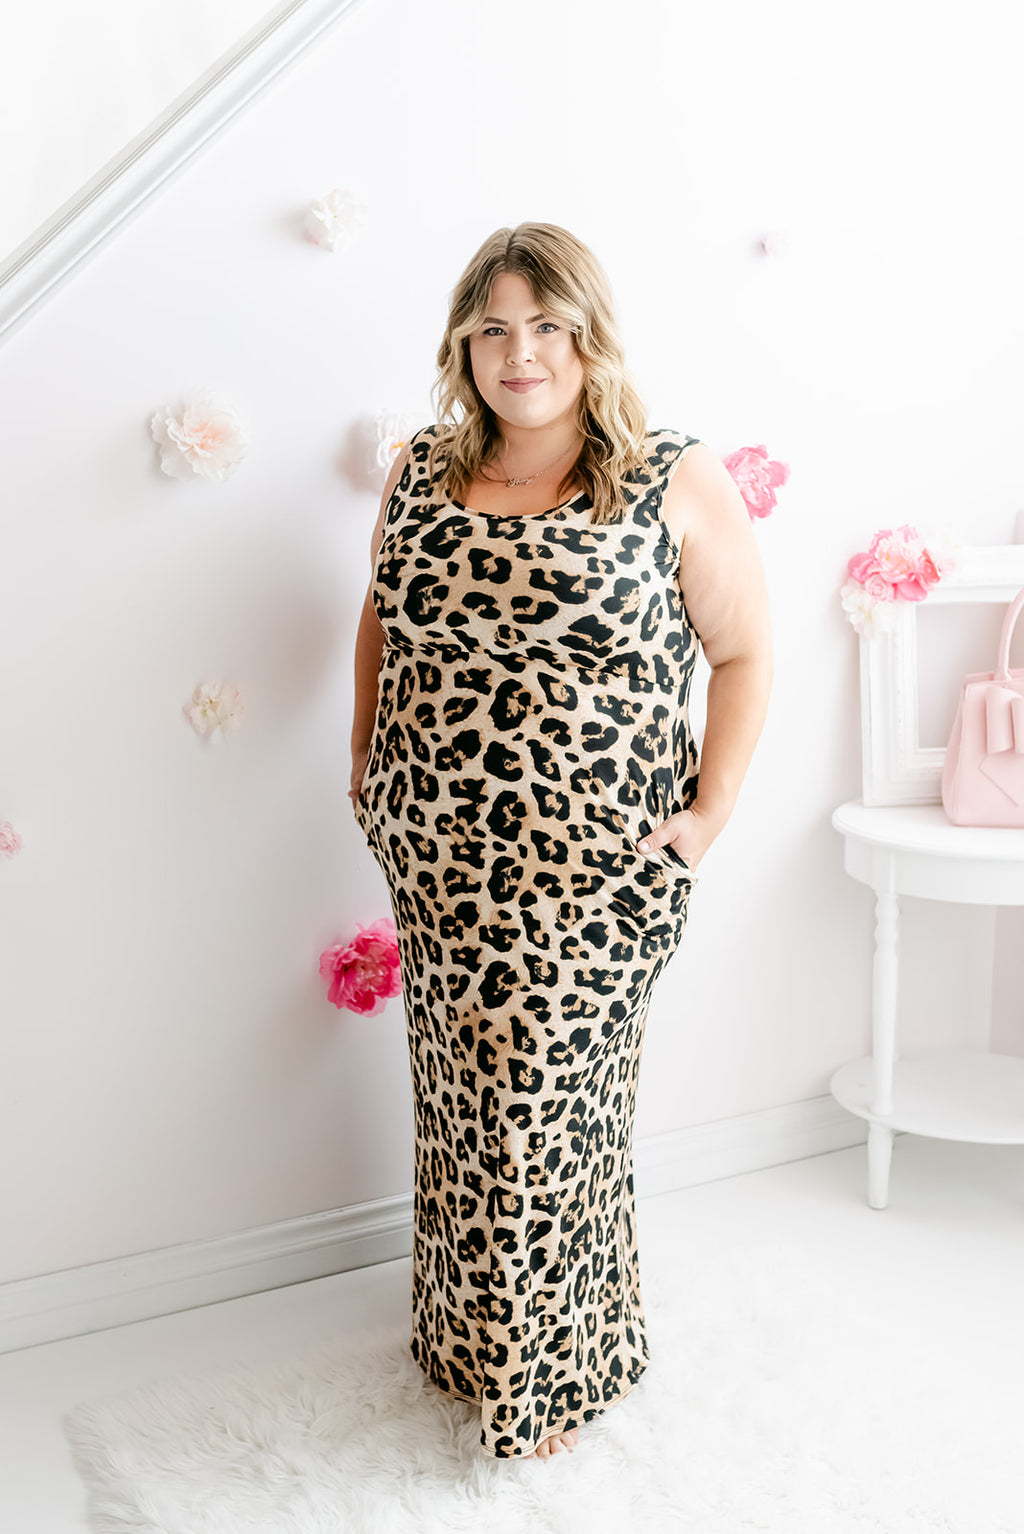 Curvy Cheetah Print Elastic Waist Maxi Dress - MNR Beauty Boutique